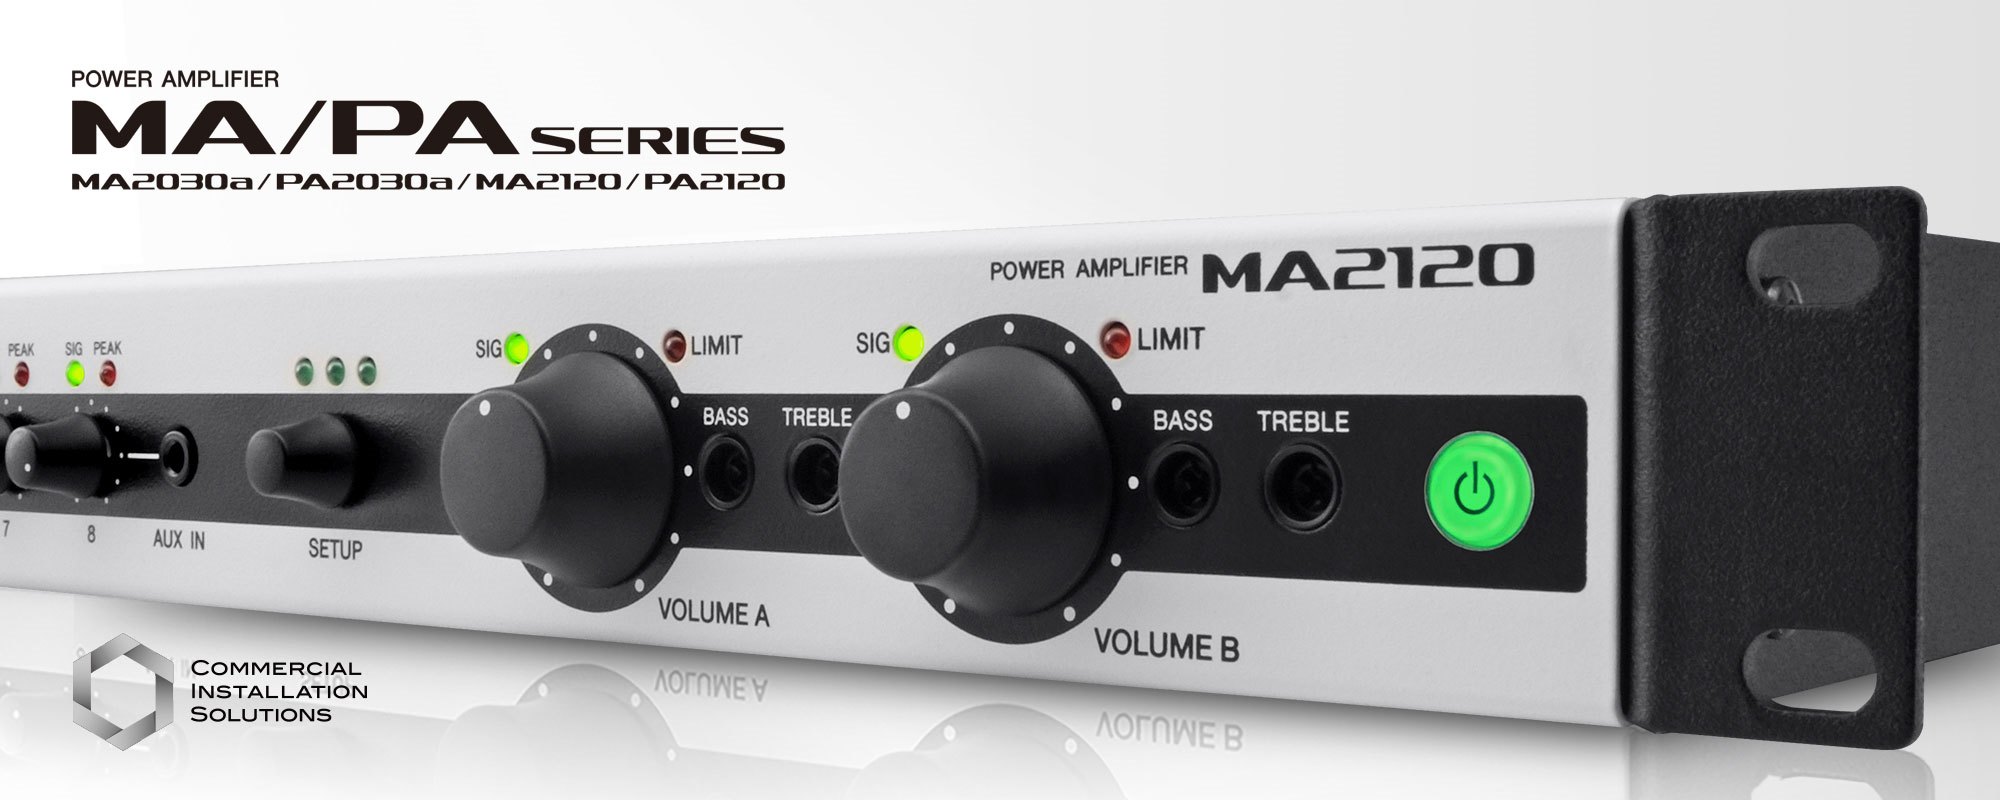 YAMAHA power amplifier model ma2120-